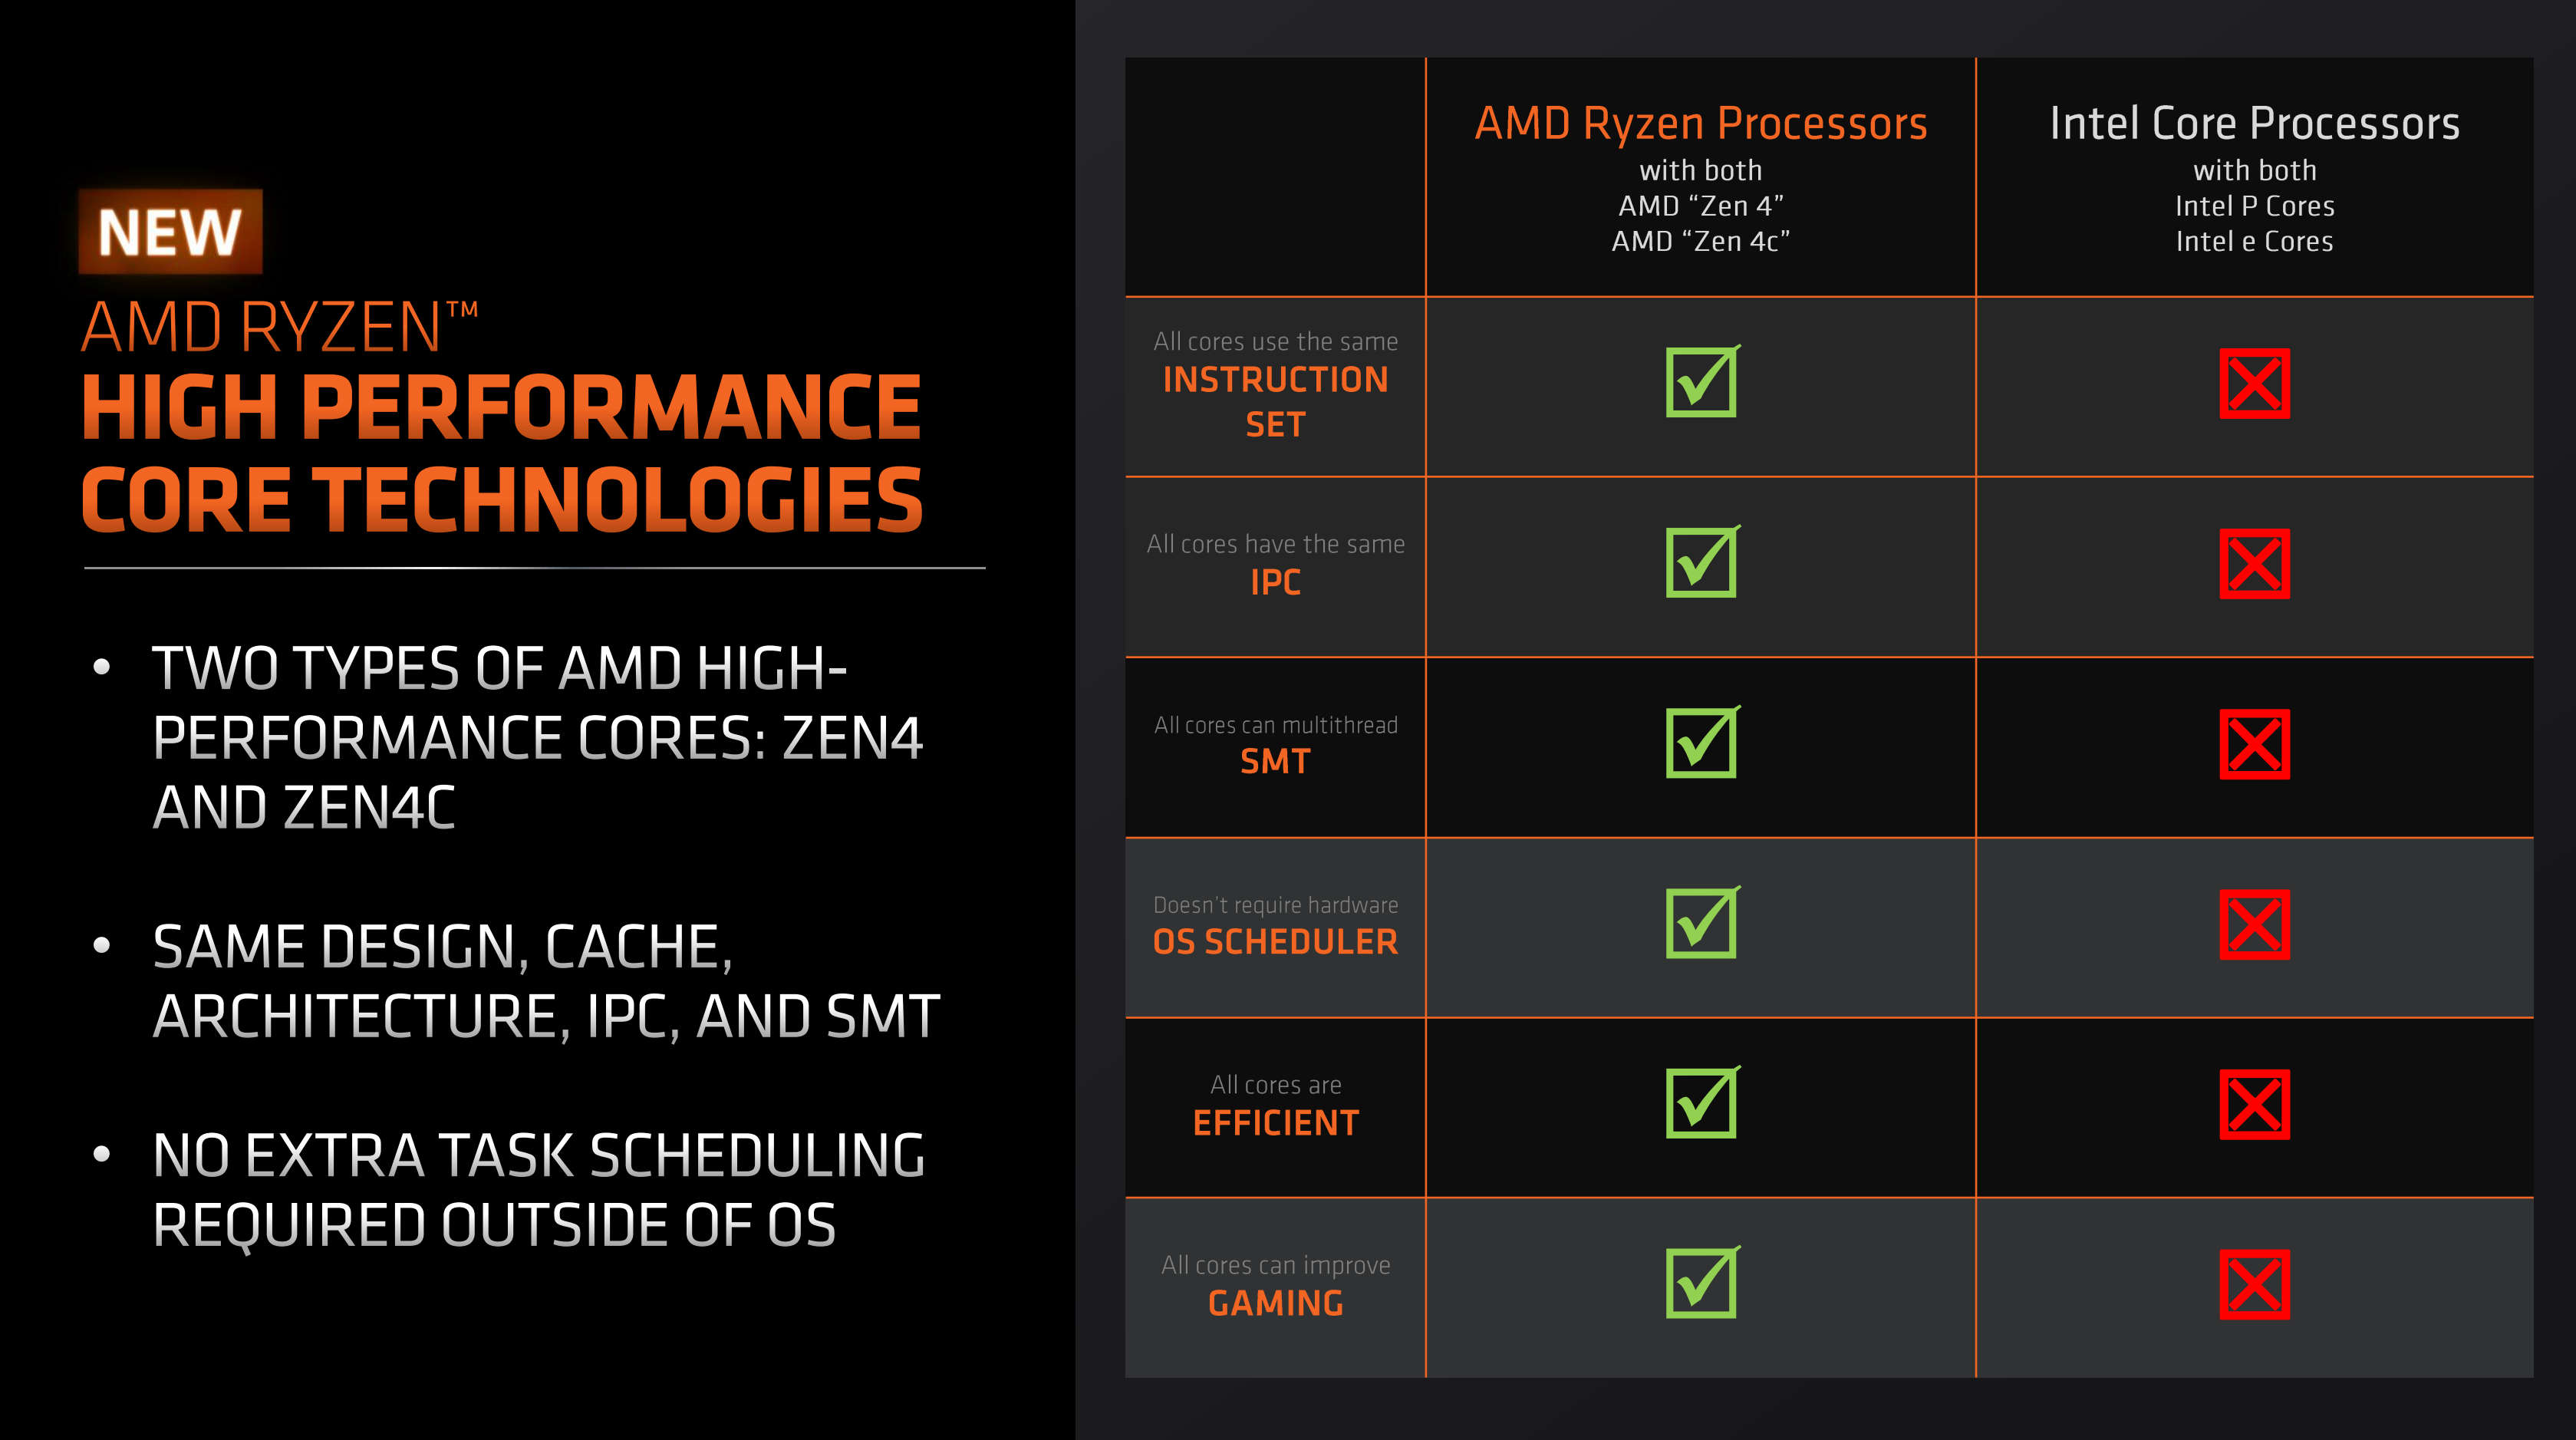 AMD's comparison between its Zen 4c APUs and Intel's mobile processors